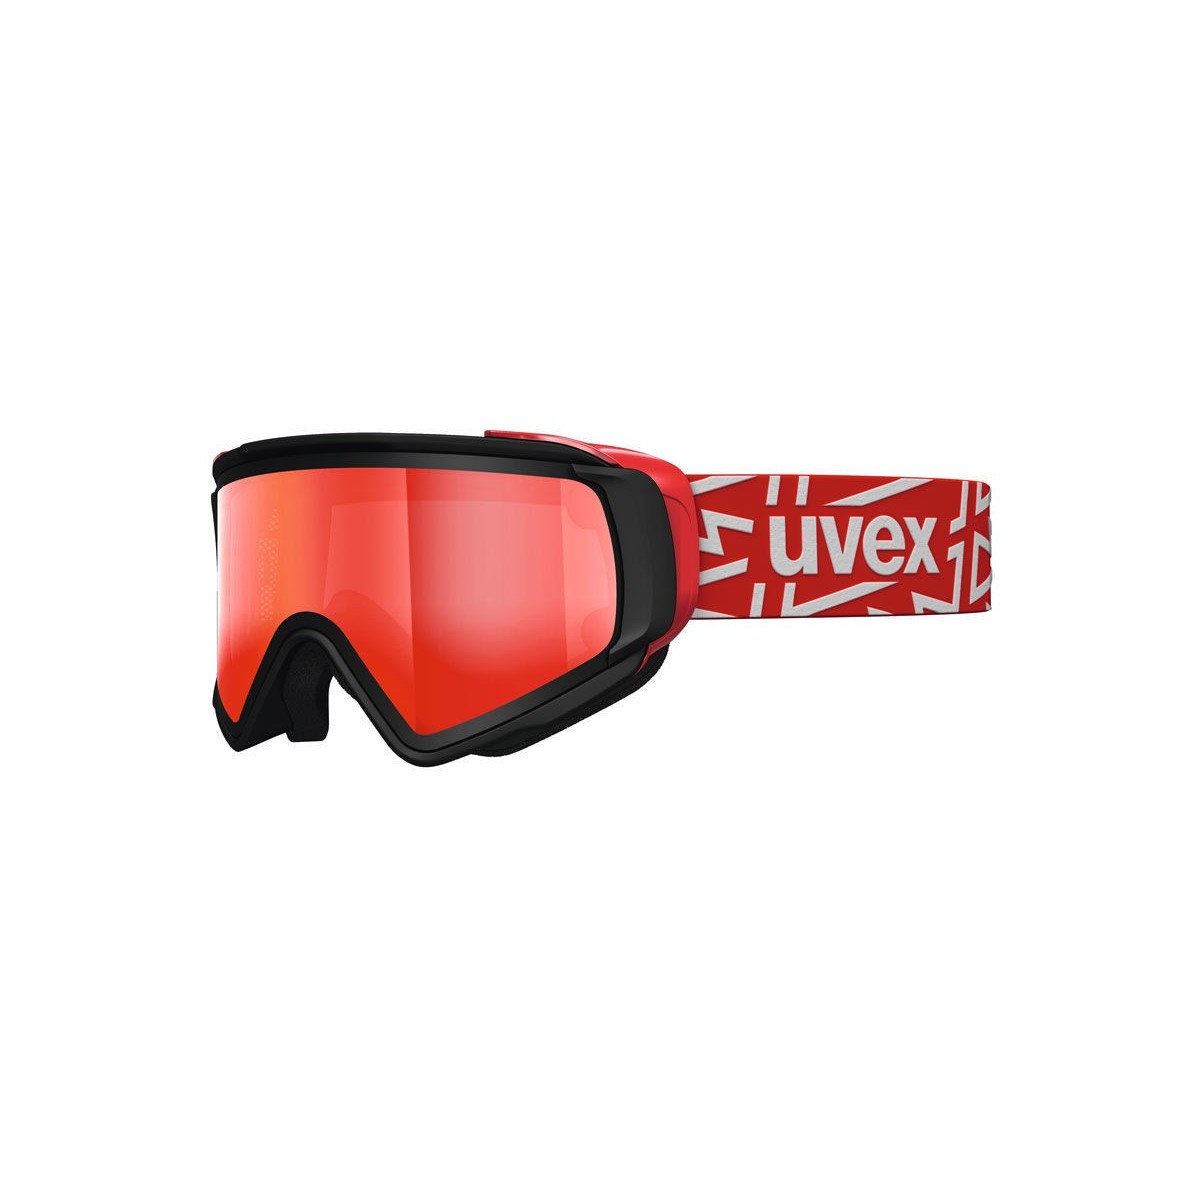 UVEX ski goggles JAKK TOP red